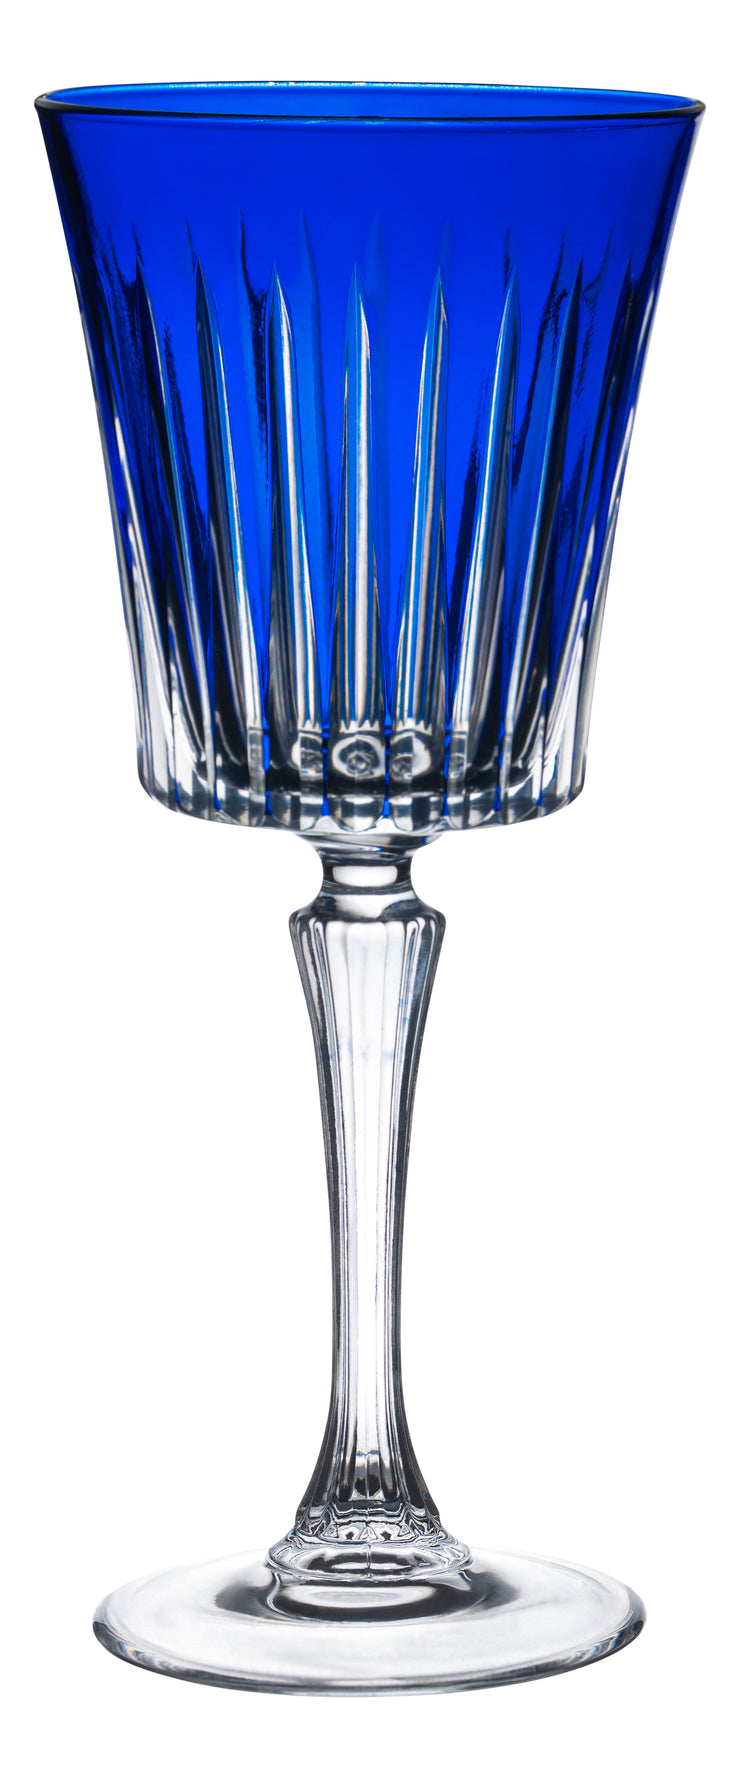 European Glass Red Wine - White Wine - Water Glass- Blue - Stemmed Glasses - Set of 6 Goblets - 10 oz. Beautifully Designed